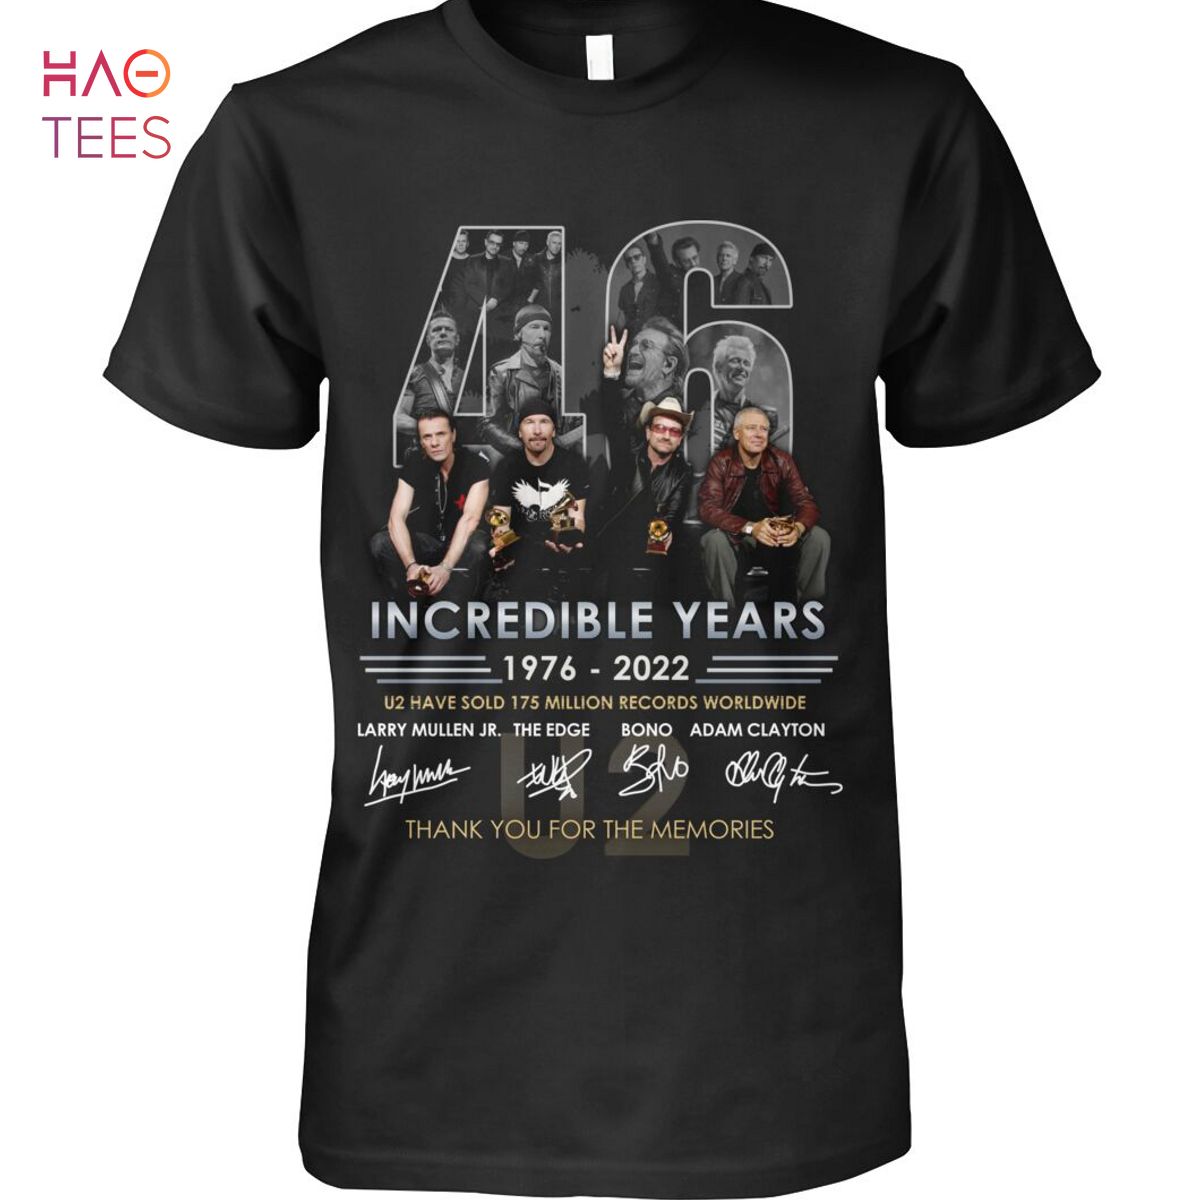 46 Incredible Years 1976-2022 Shirt